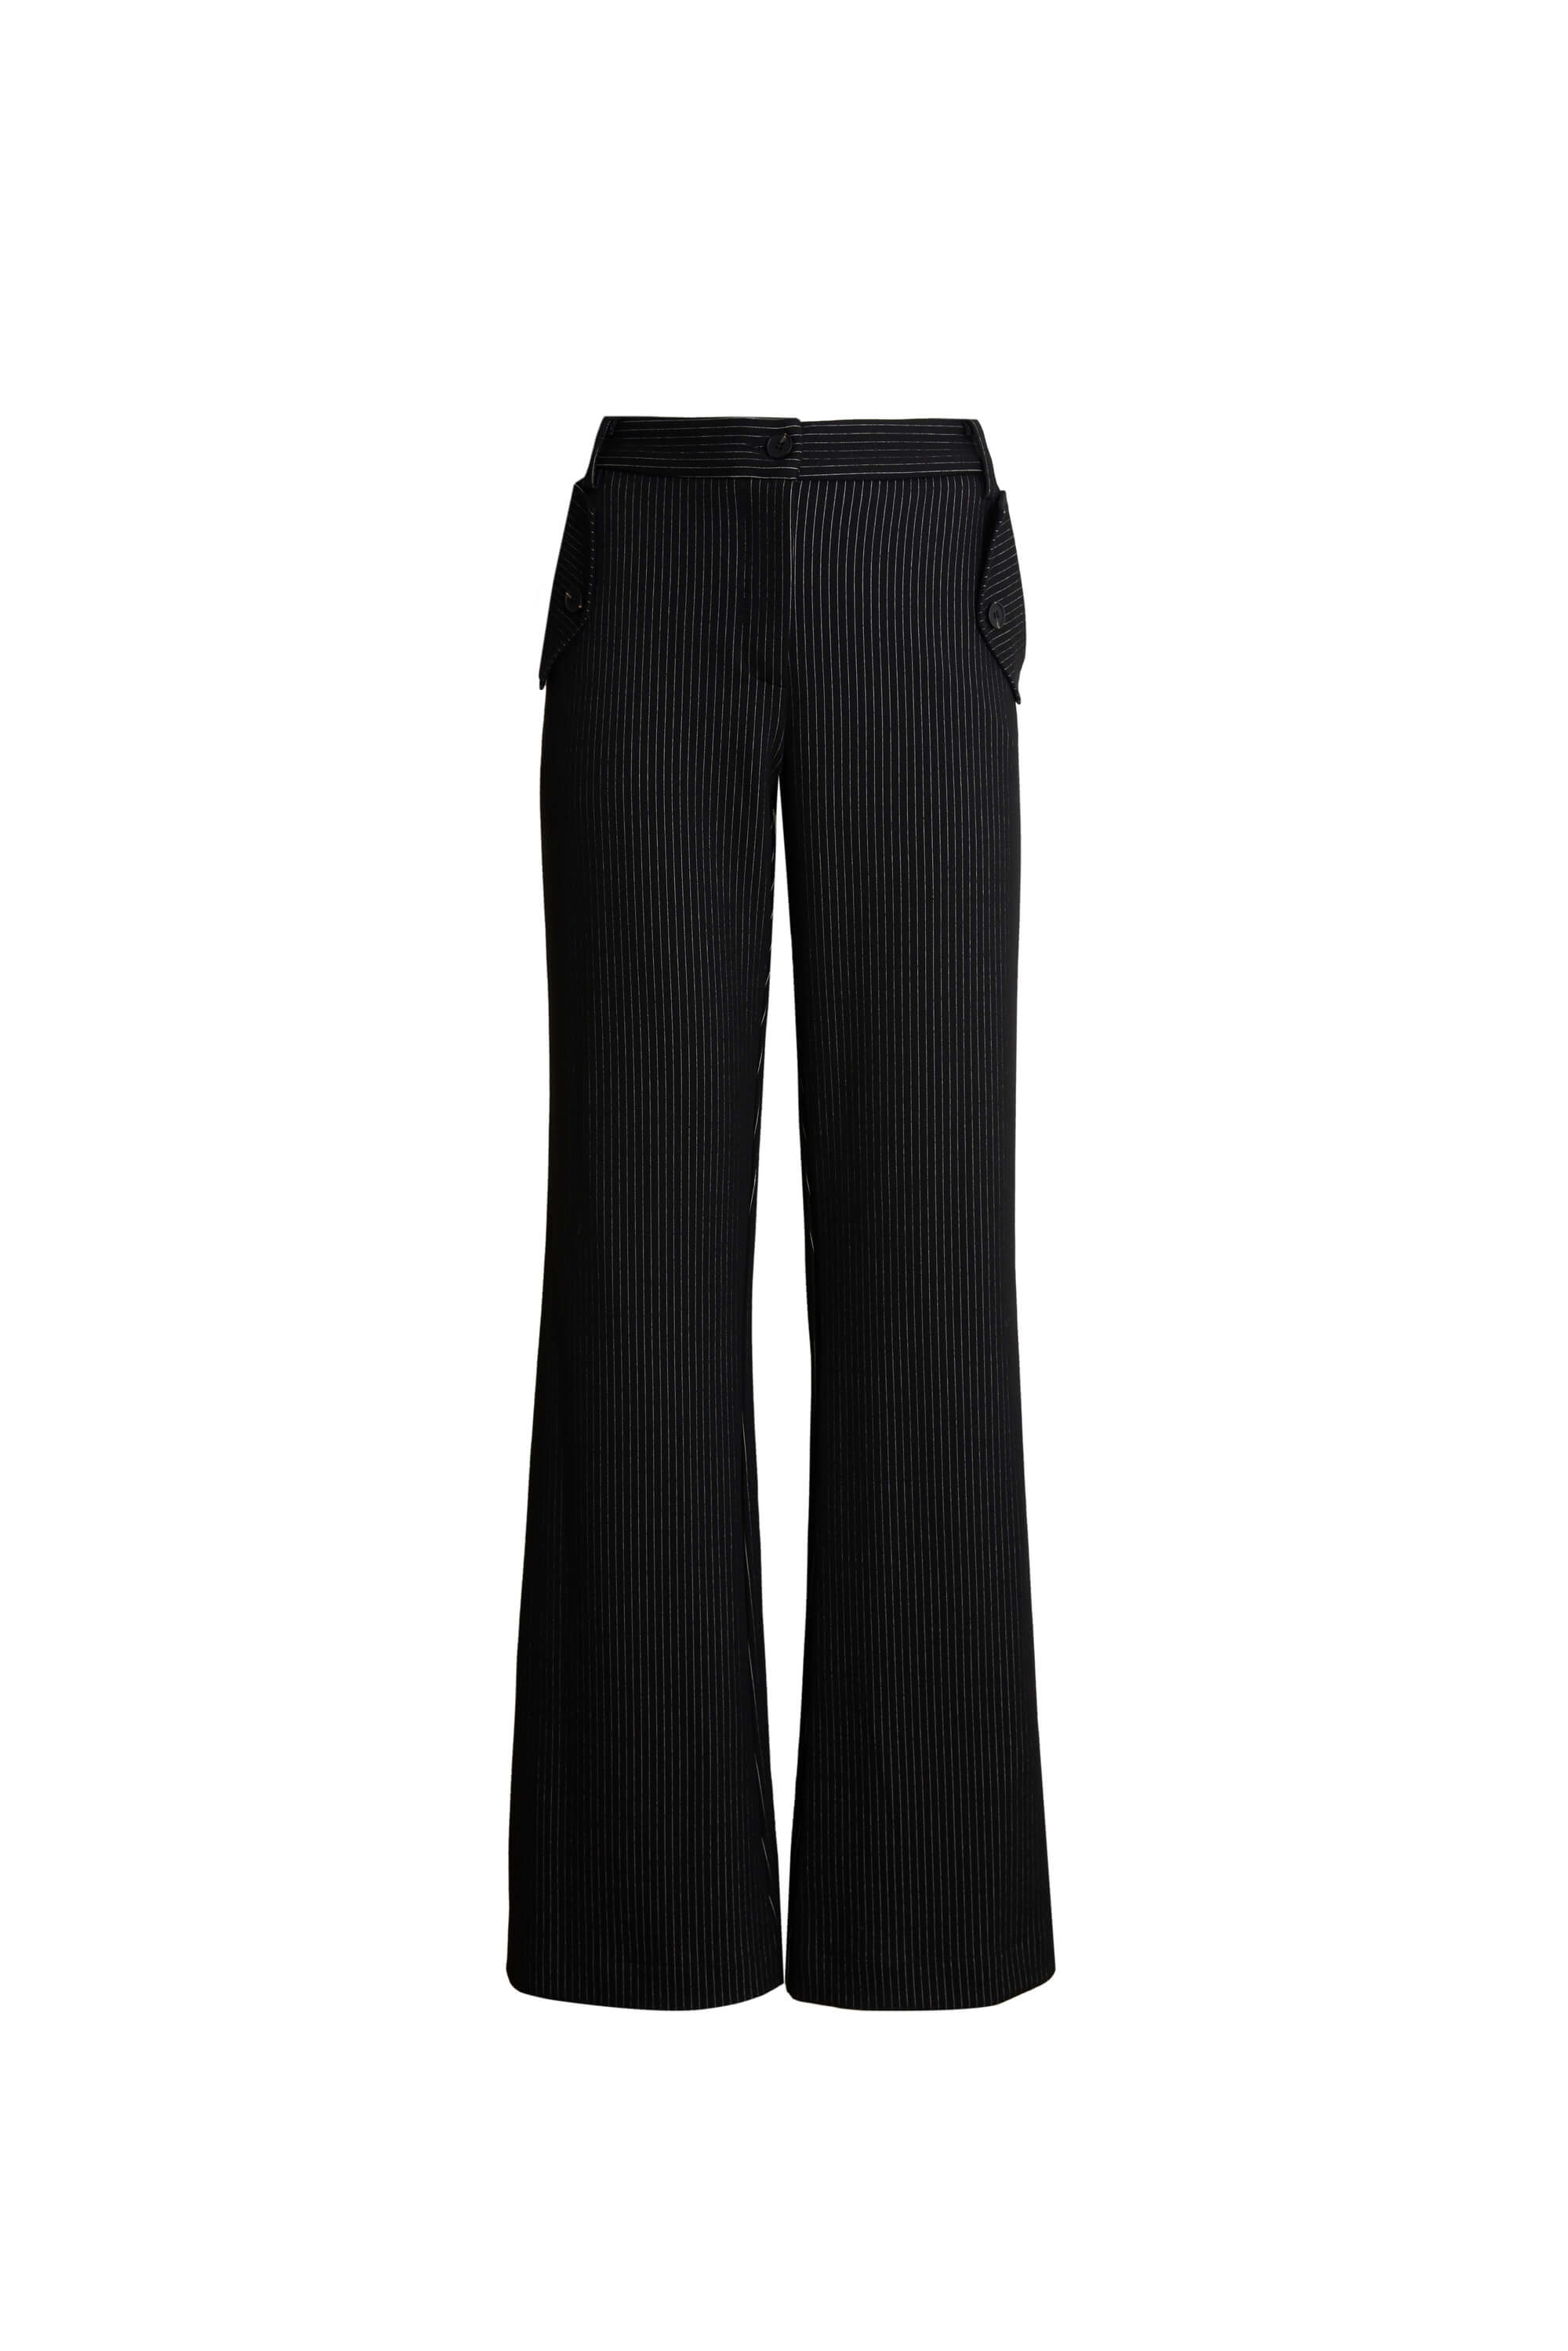 Women’s Black Pin Stripe Tailored Trousers Large James Lakeland